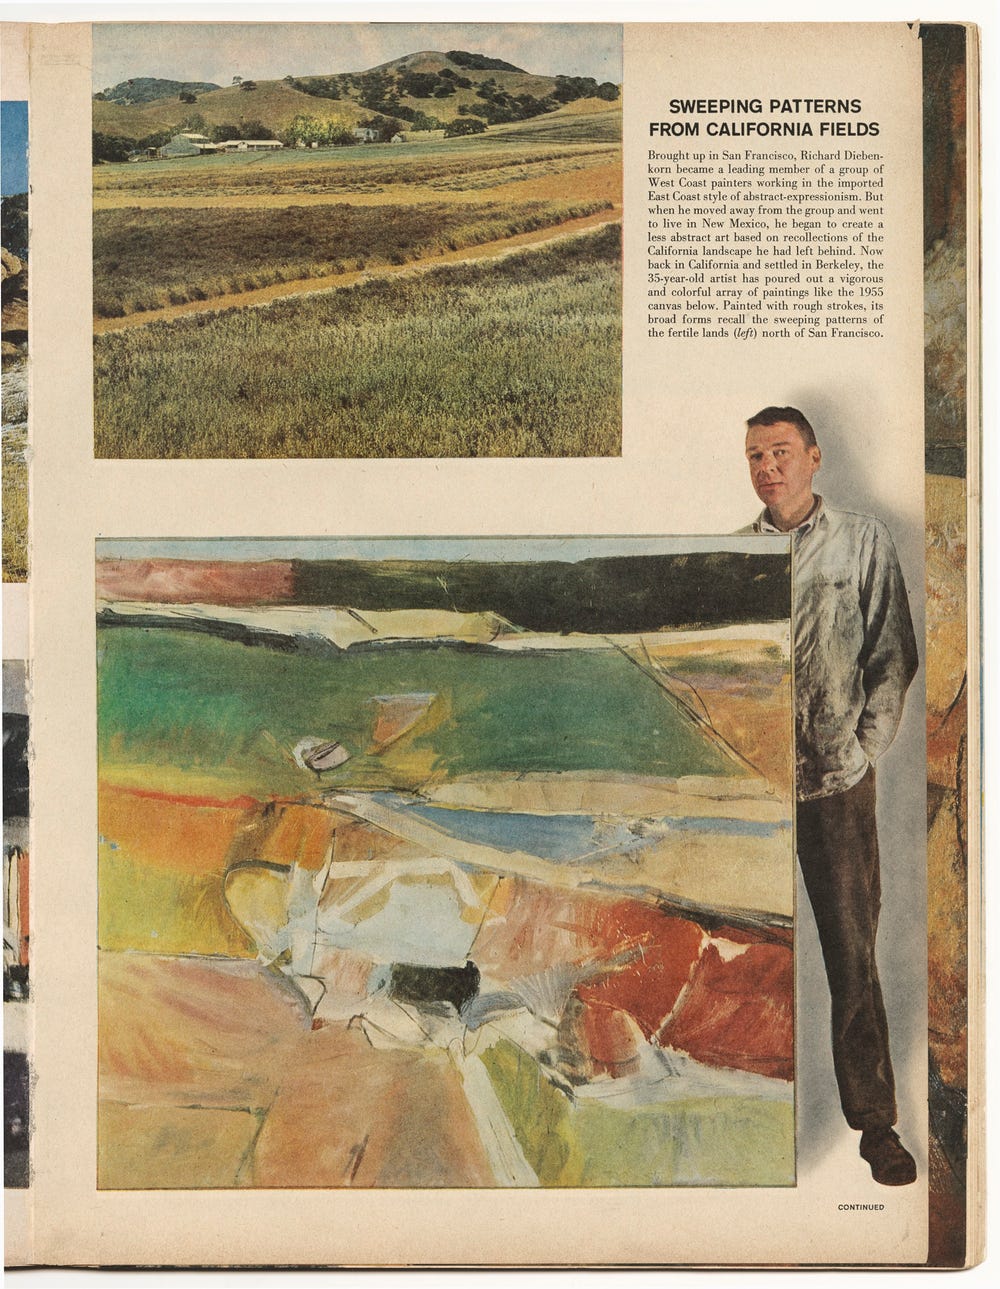 Diebenkorn with “Berkeley #44” in “Life” magazine, November 4, 1957